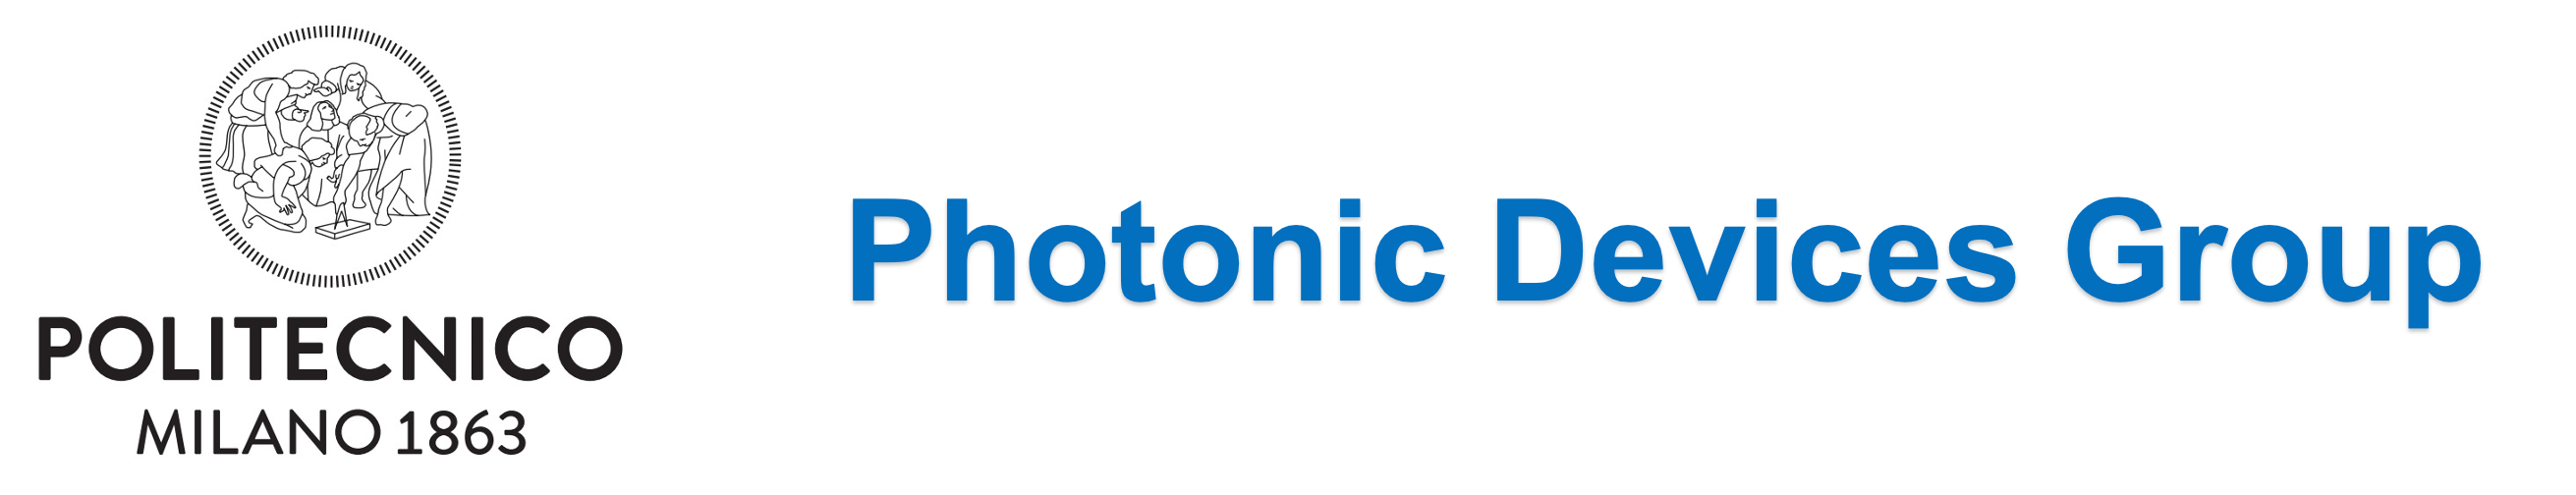 Photonics Devices Group